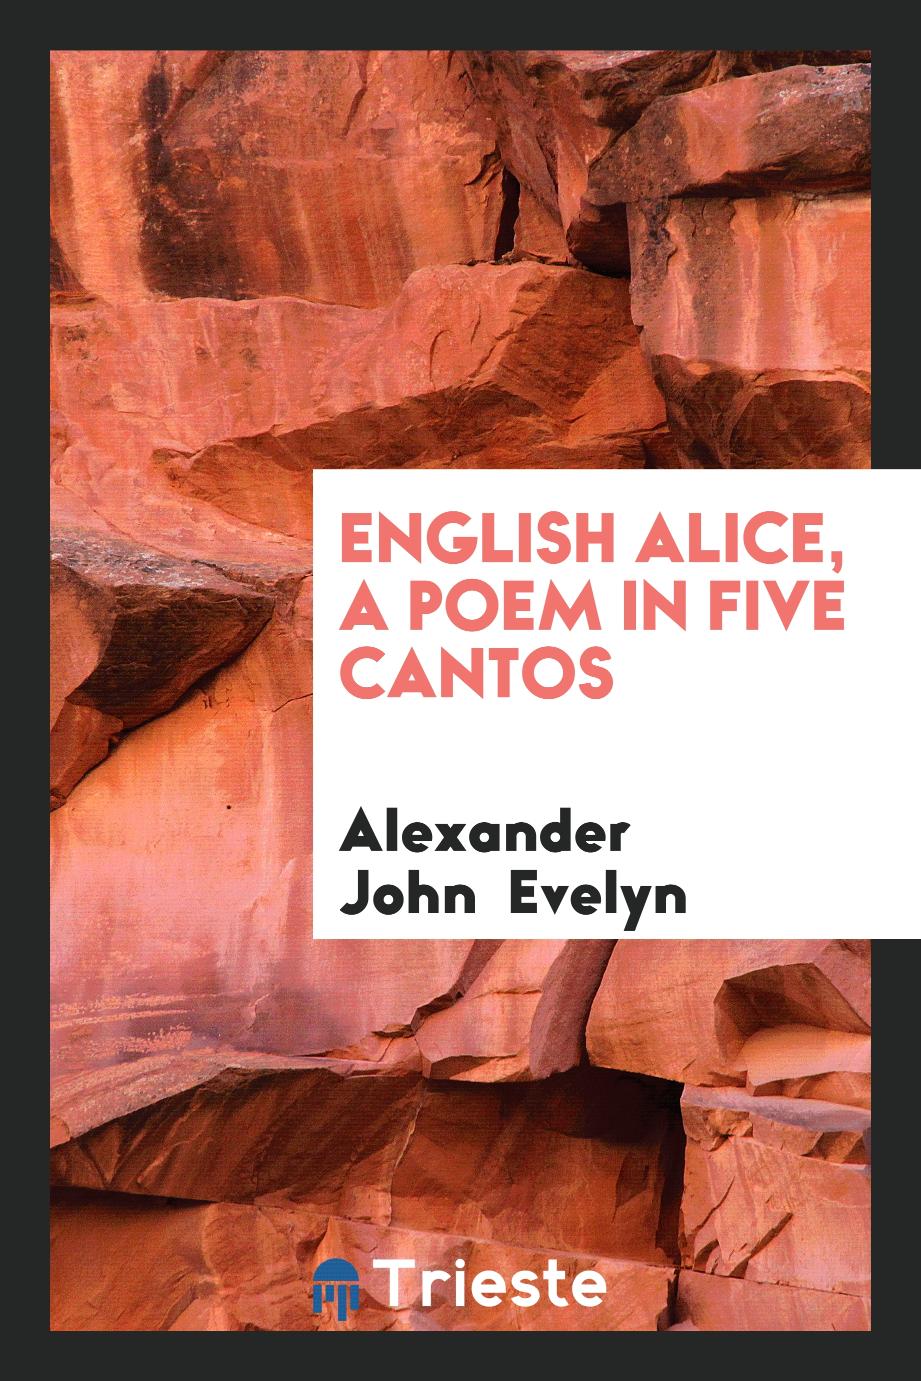 English Alice, a poem in Five cantos